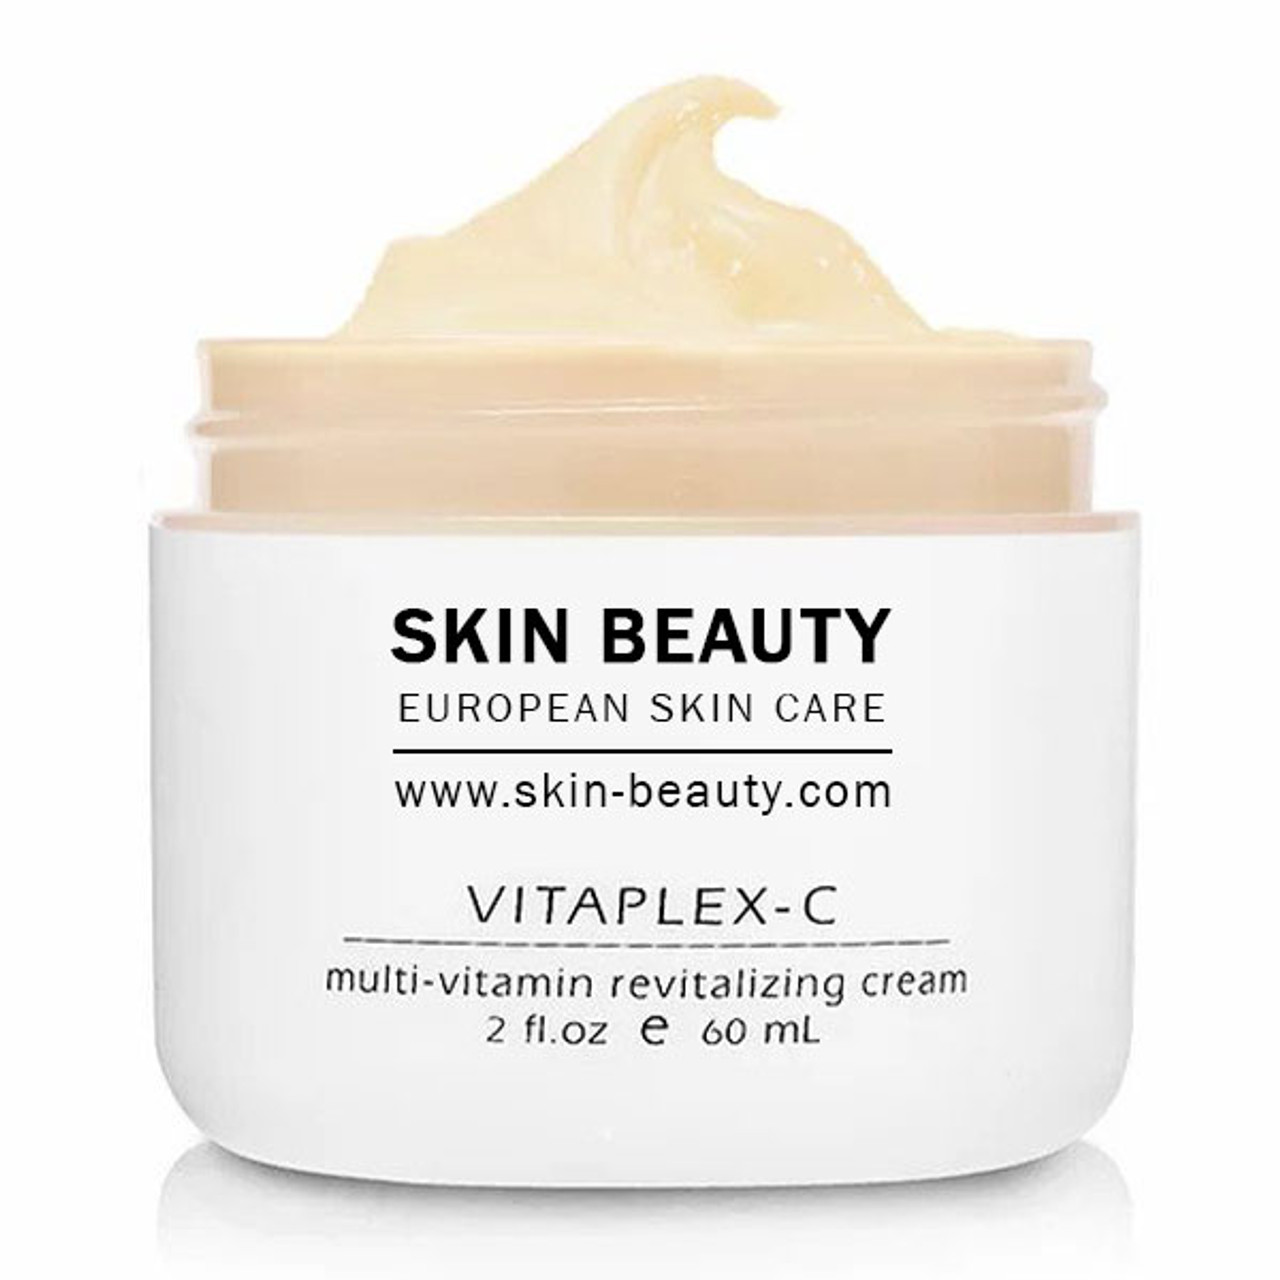 Skin Beauty Vitaplex-C | Multivitamin + Vitamin C Cream